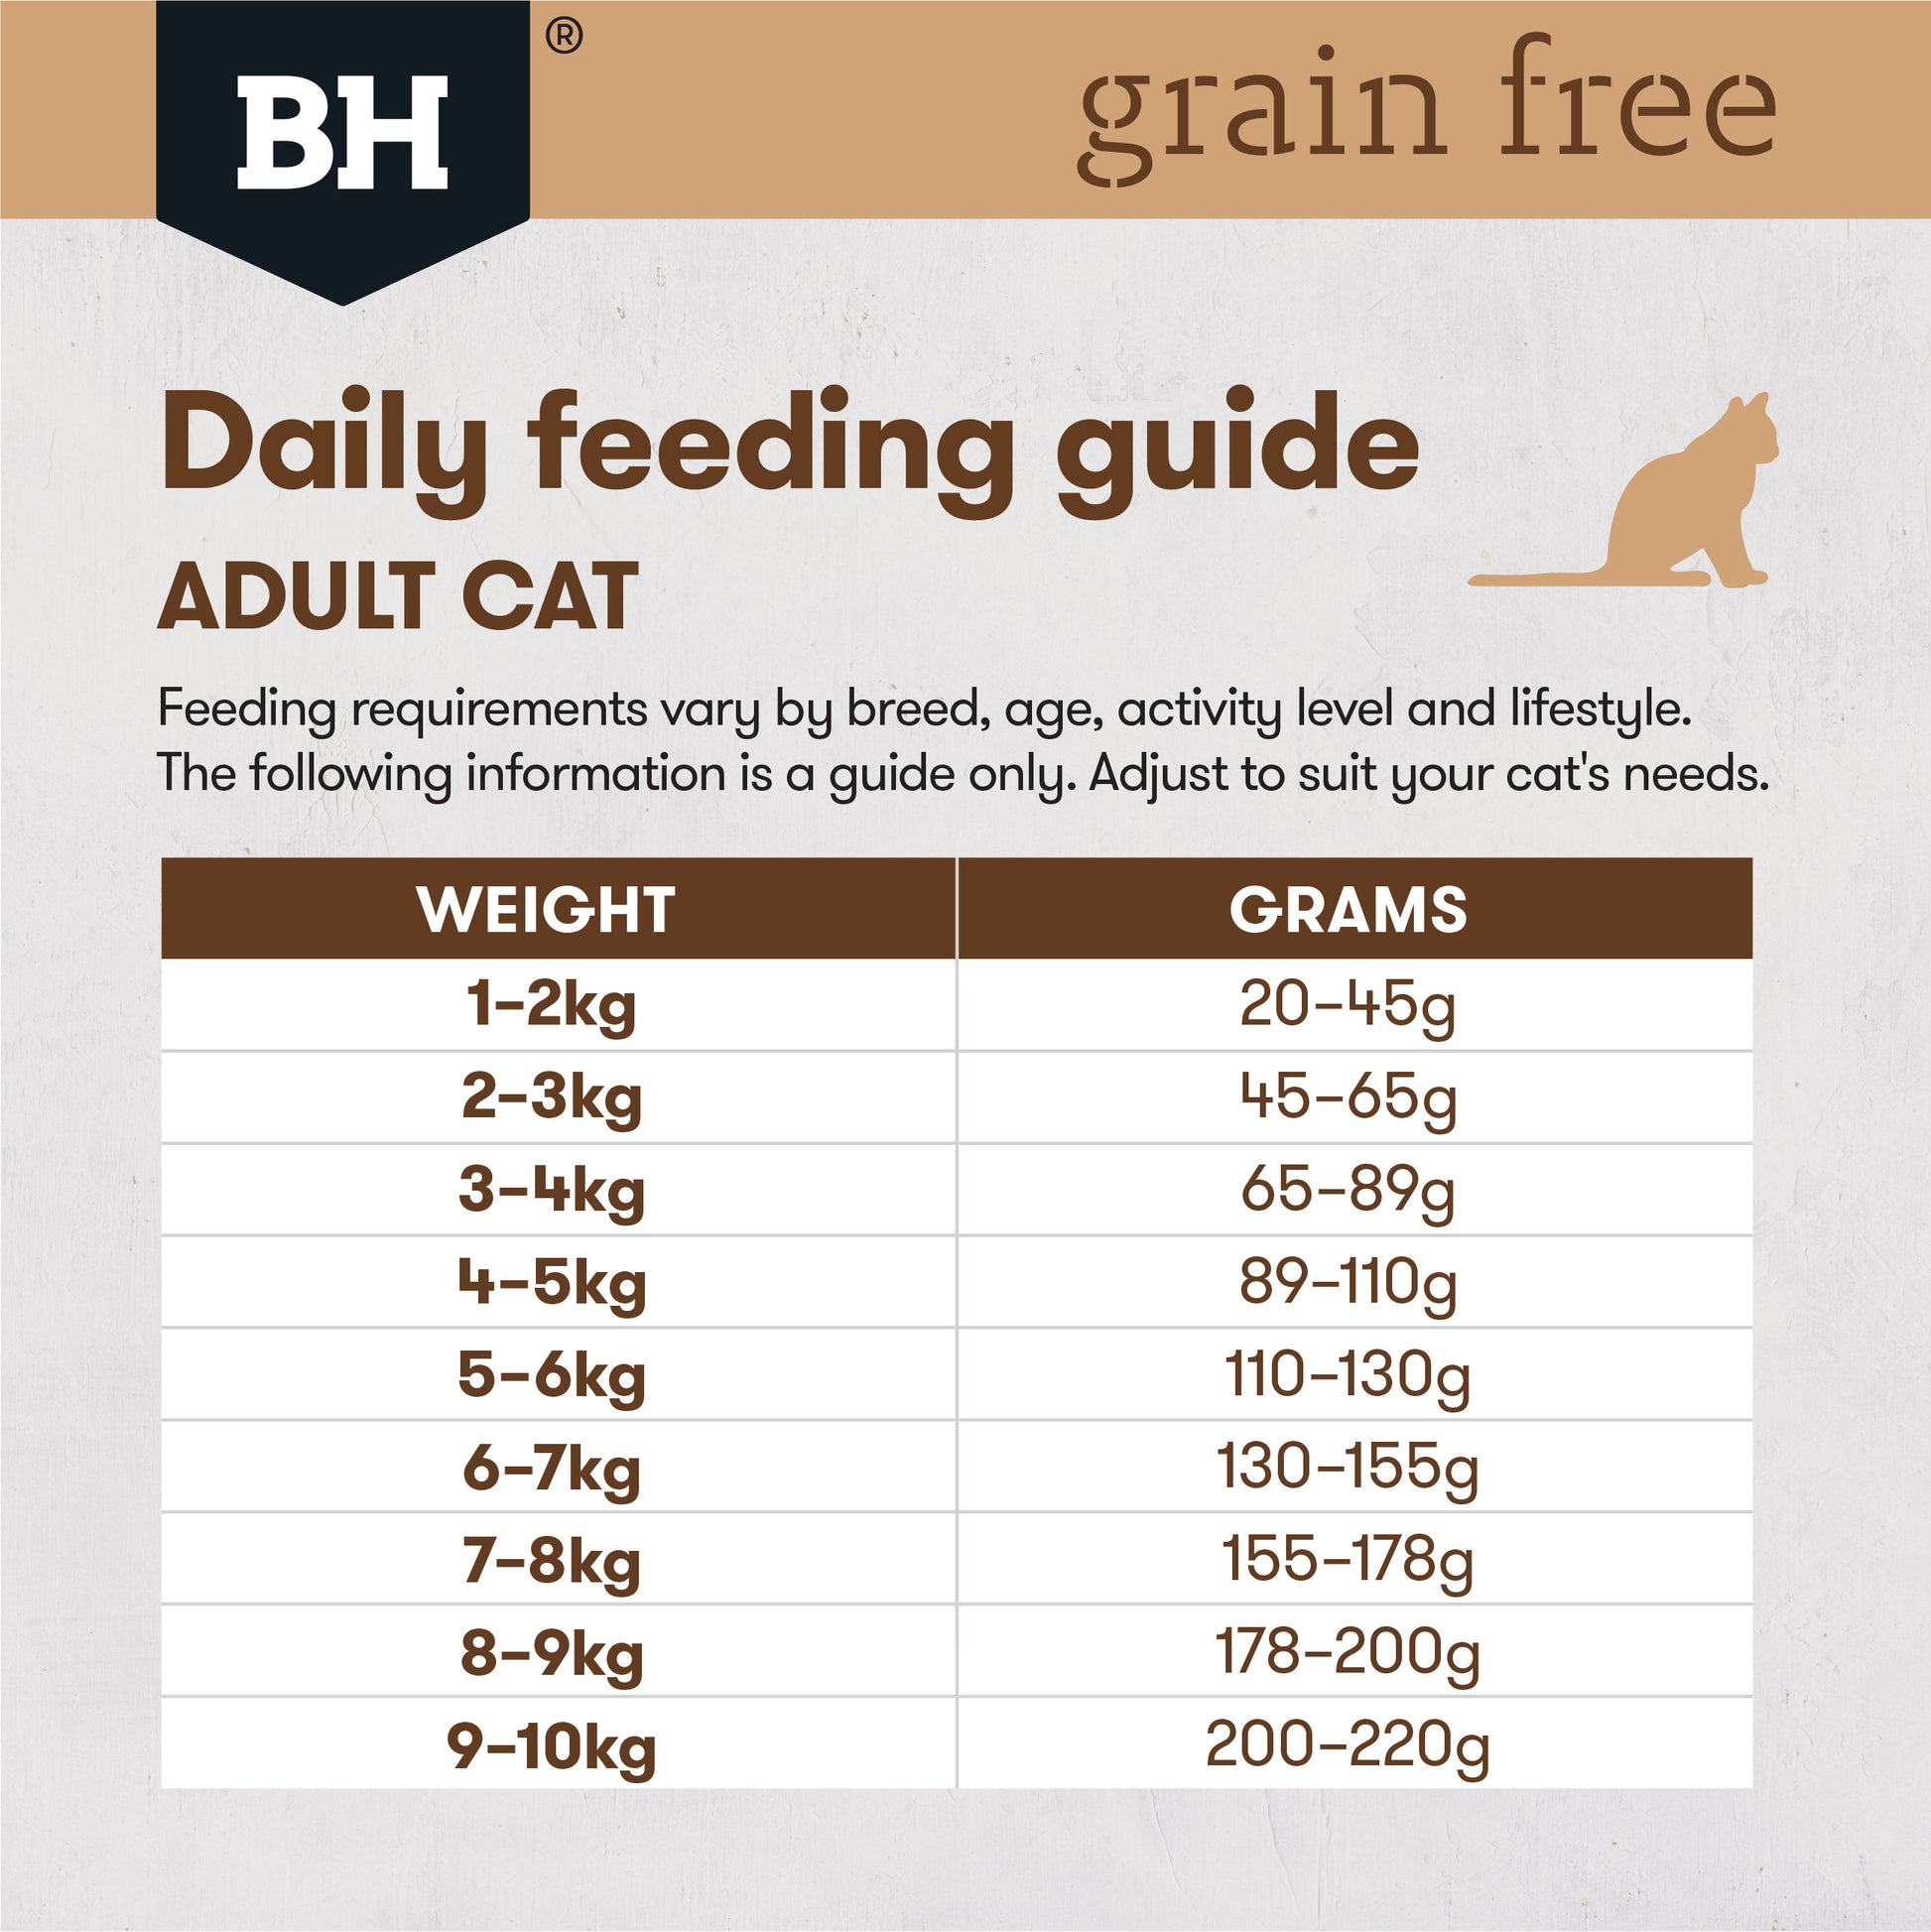 Black Hawk Grain Free Dry Cat Food Duck And Fish 6KG - ADS Pet Store